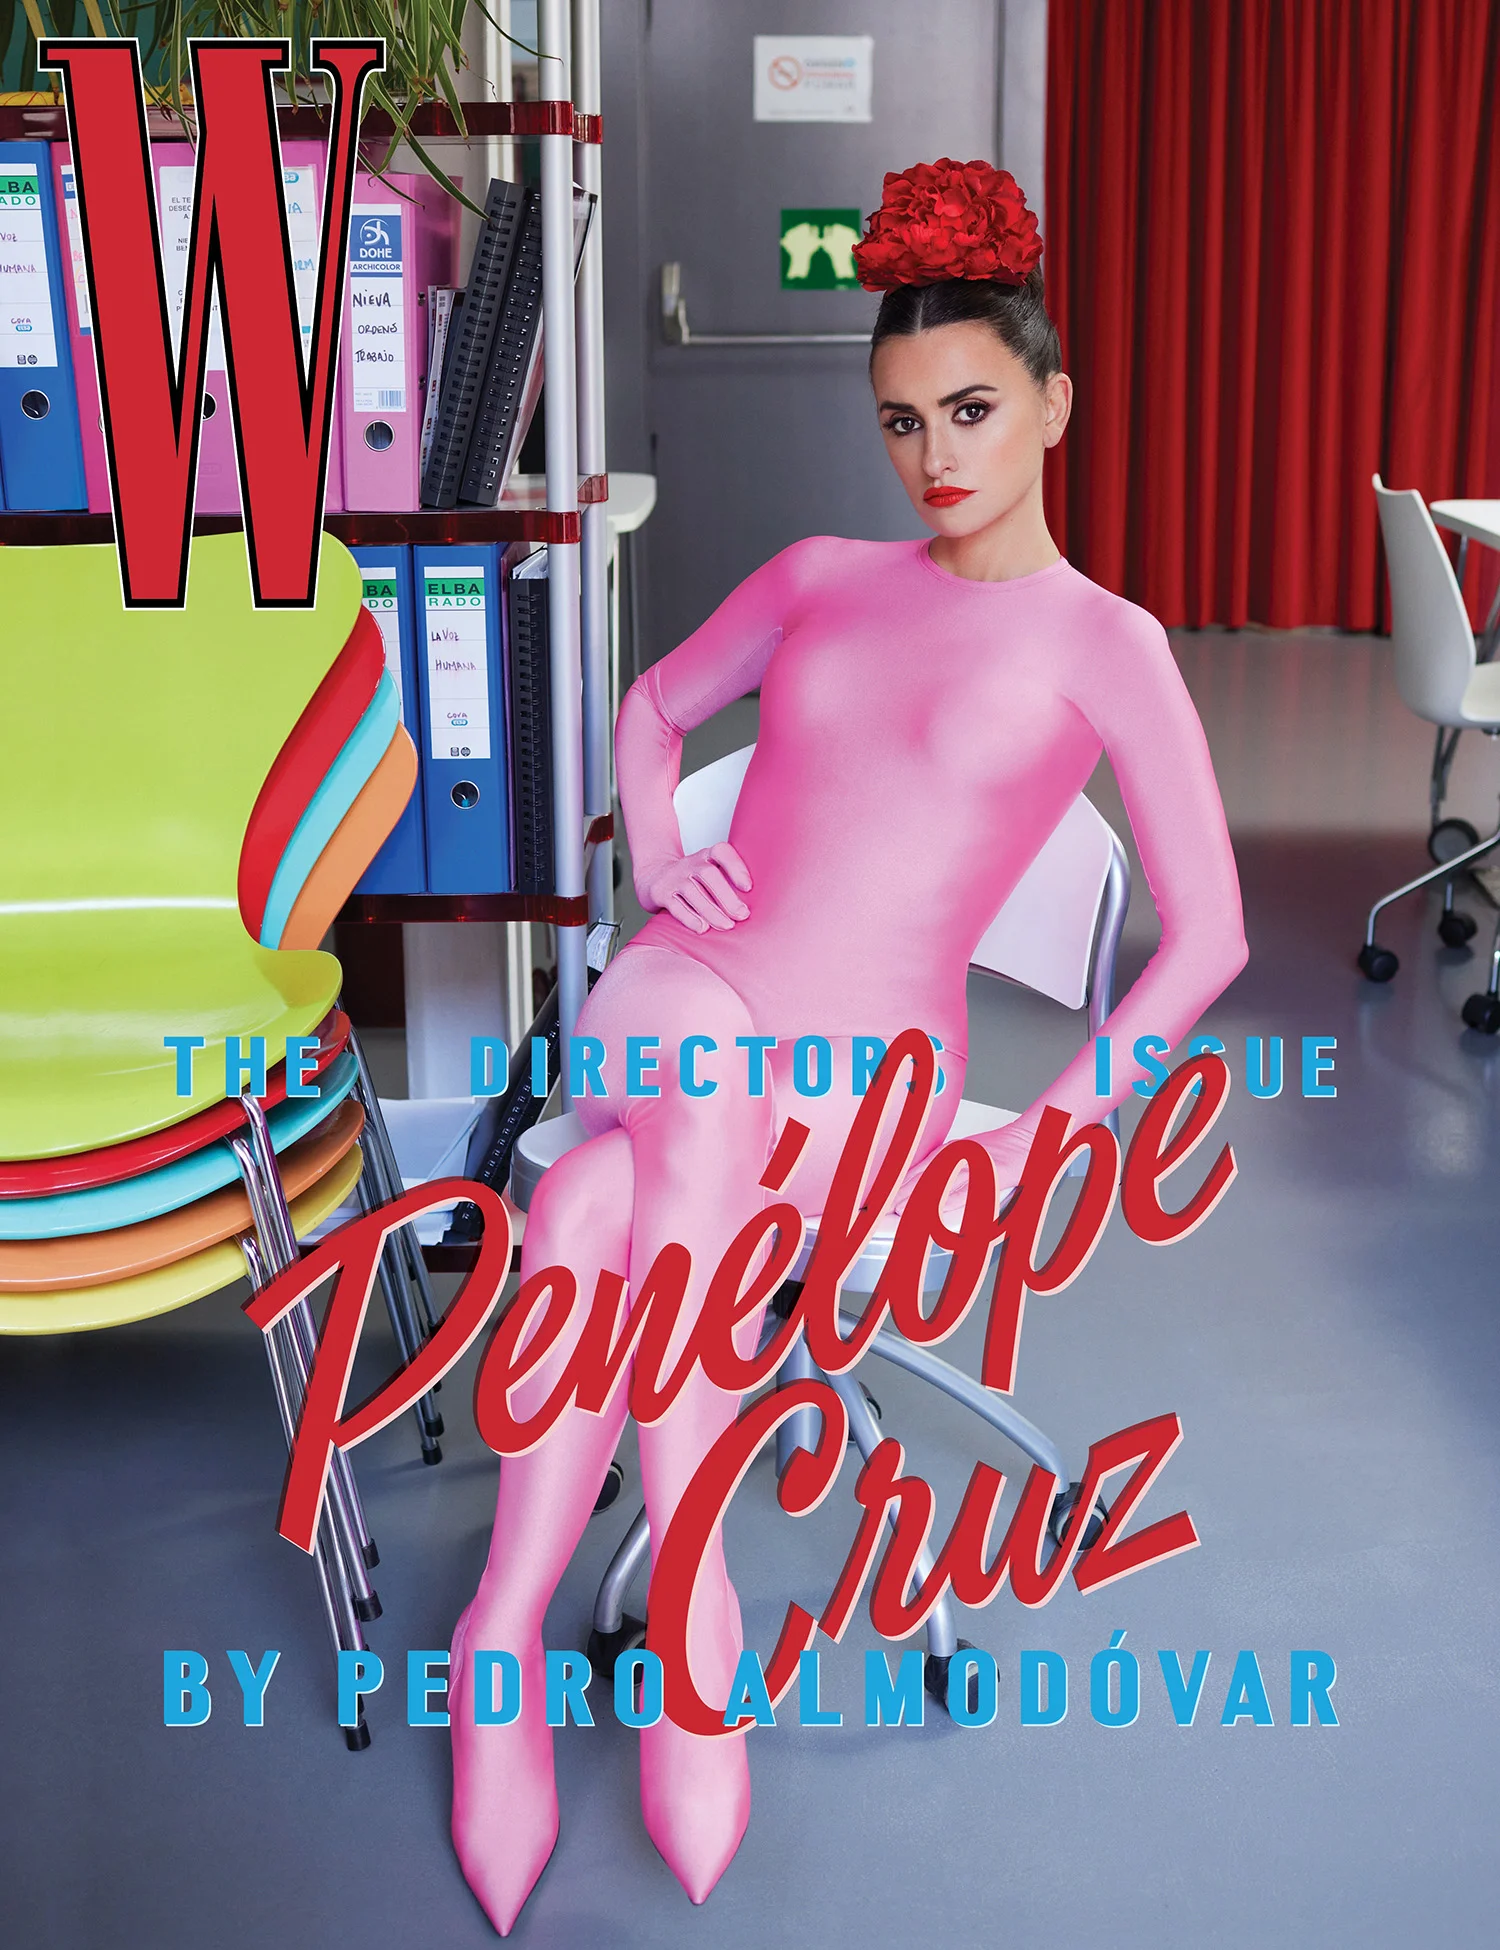 Penélope Cruz covers W Magazine Volume 2 2022 by Pedro Almodóvar